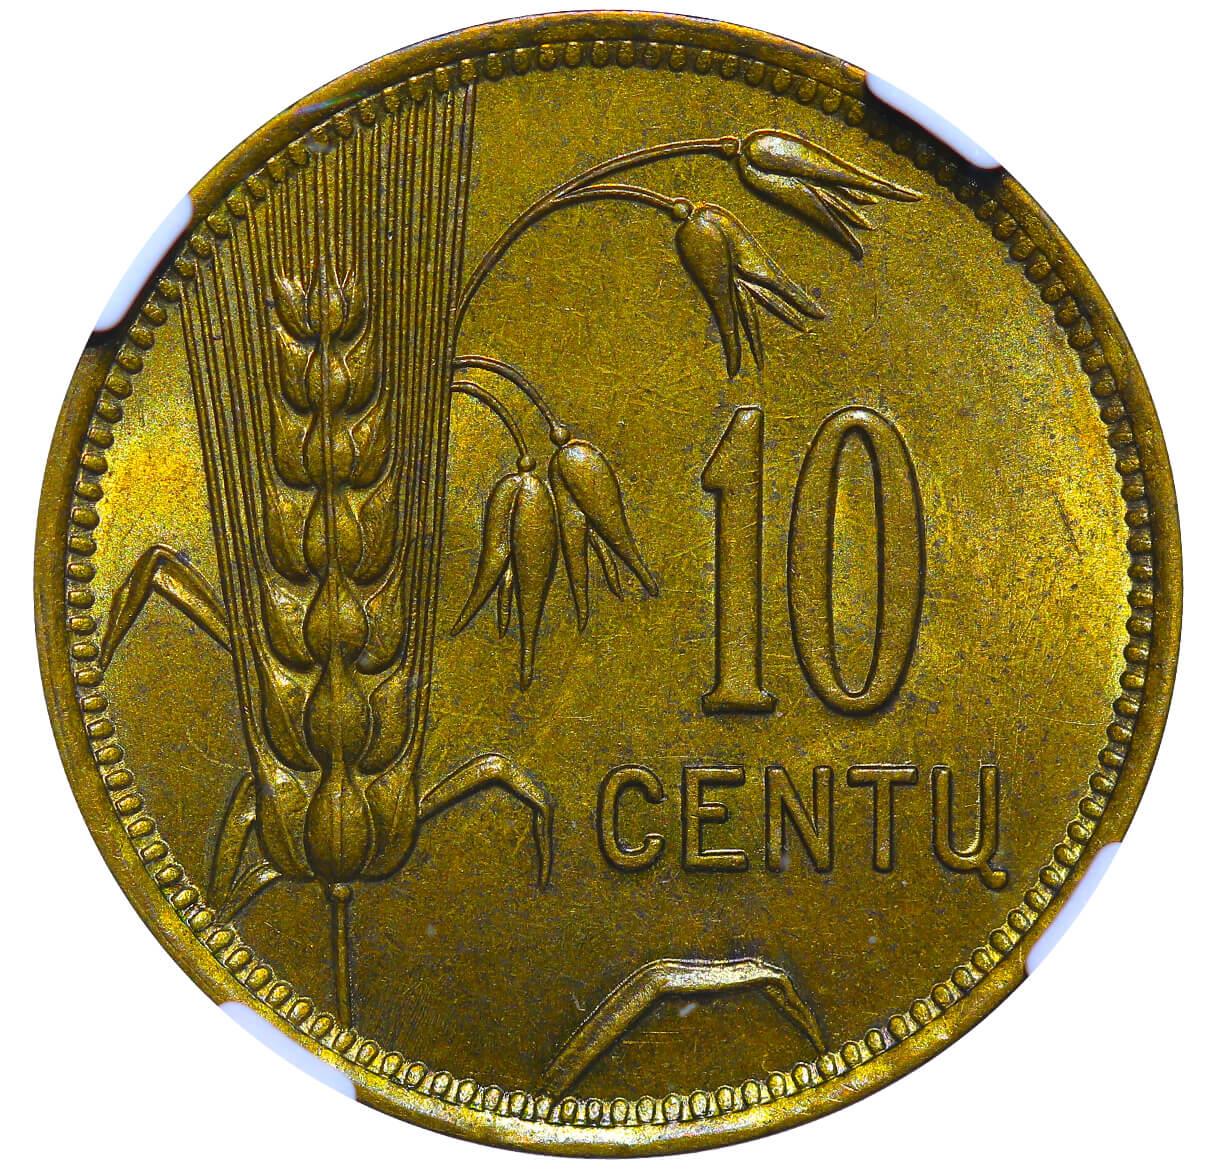 Lithuania, 10 Centu, 1925 year, NGC, MS 64 - Image 3 of 3